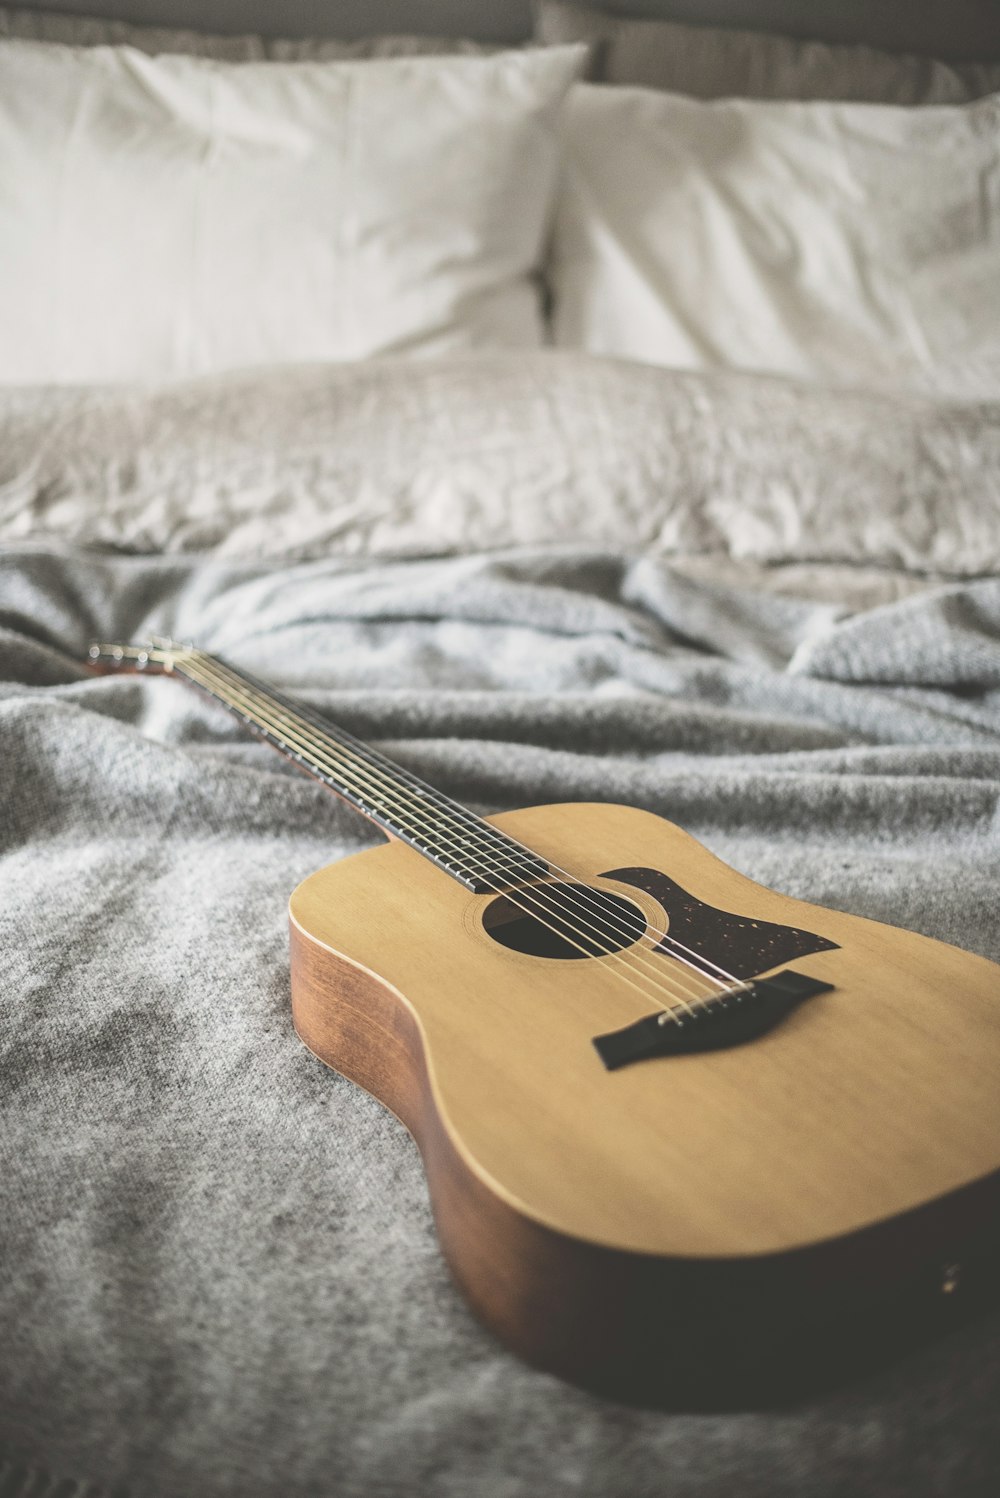 chitarra acustica marrone su coperta grigia